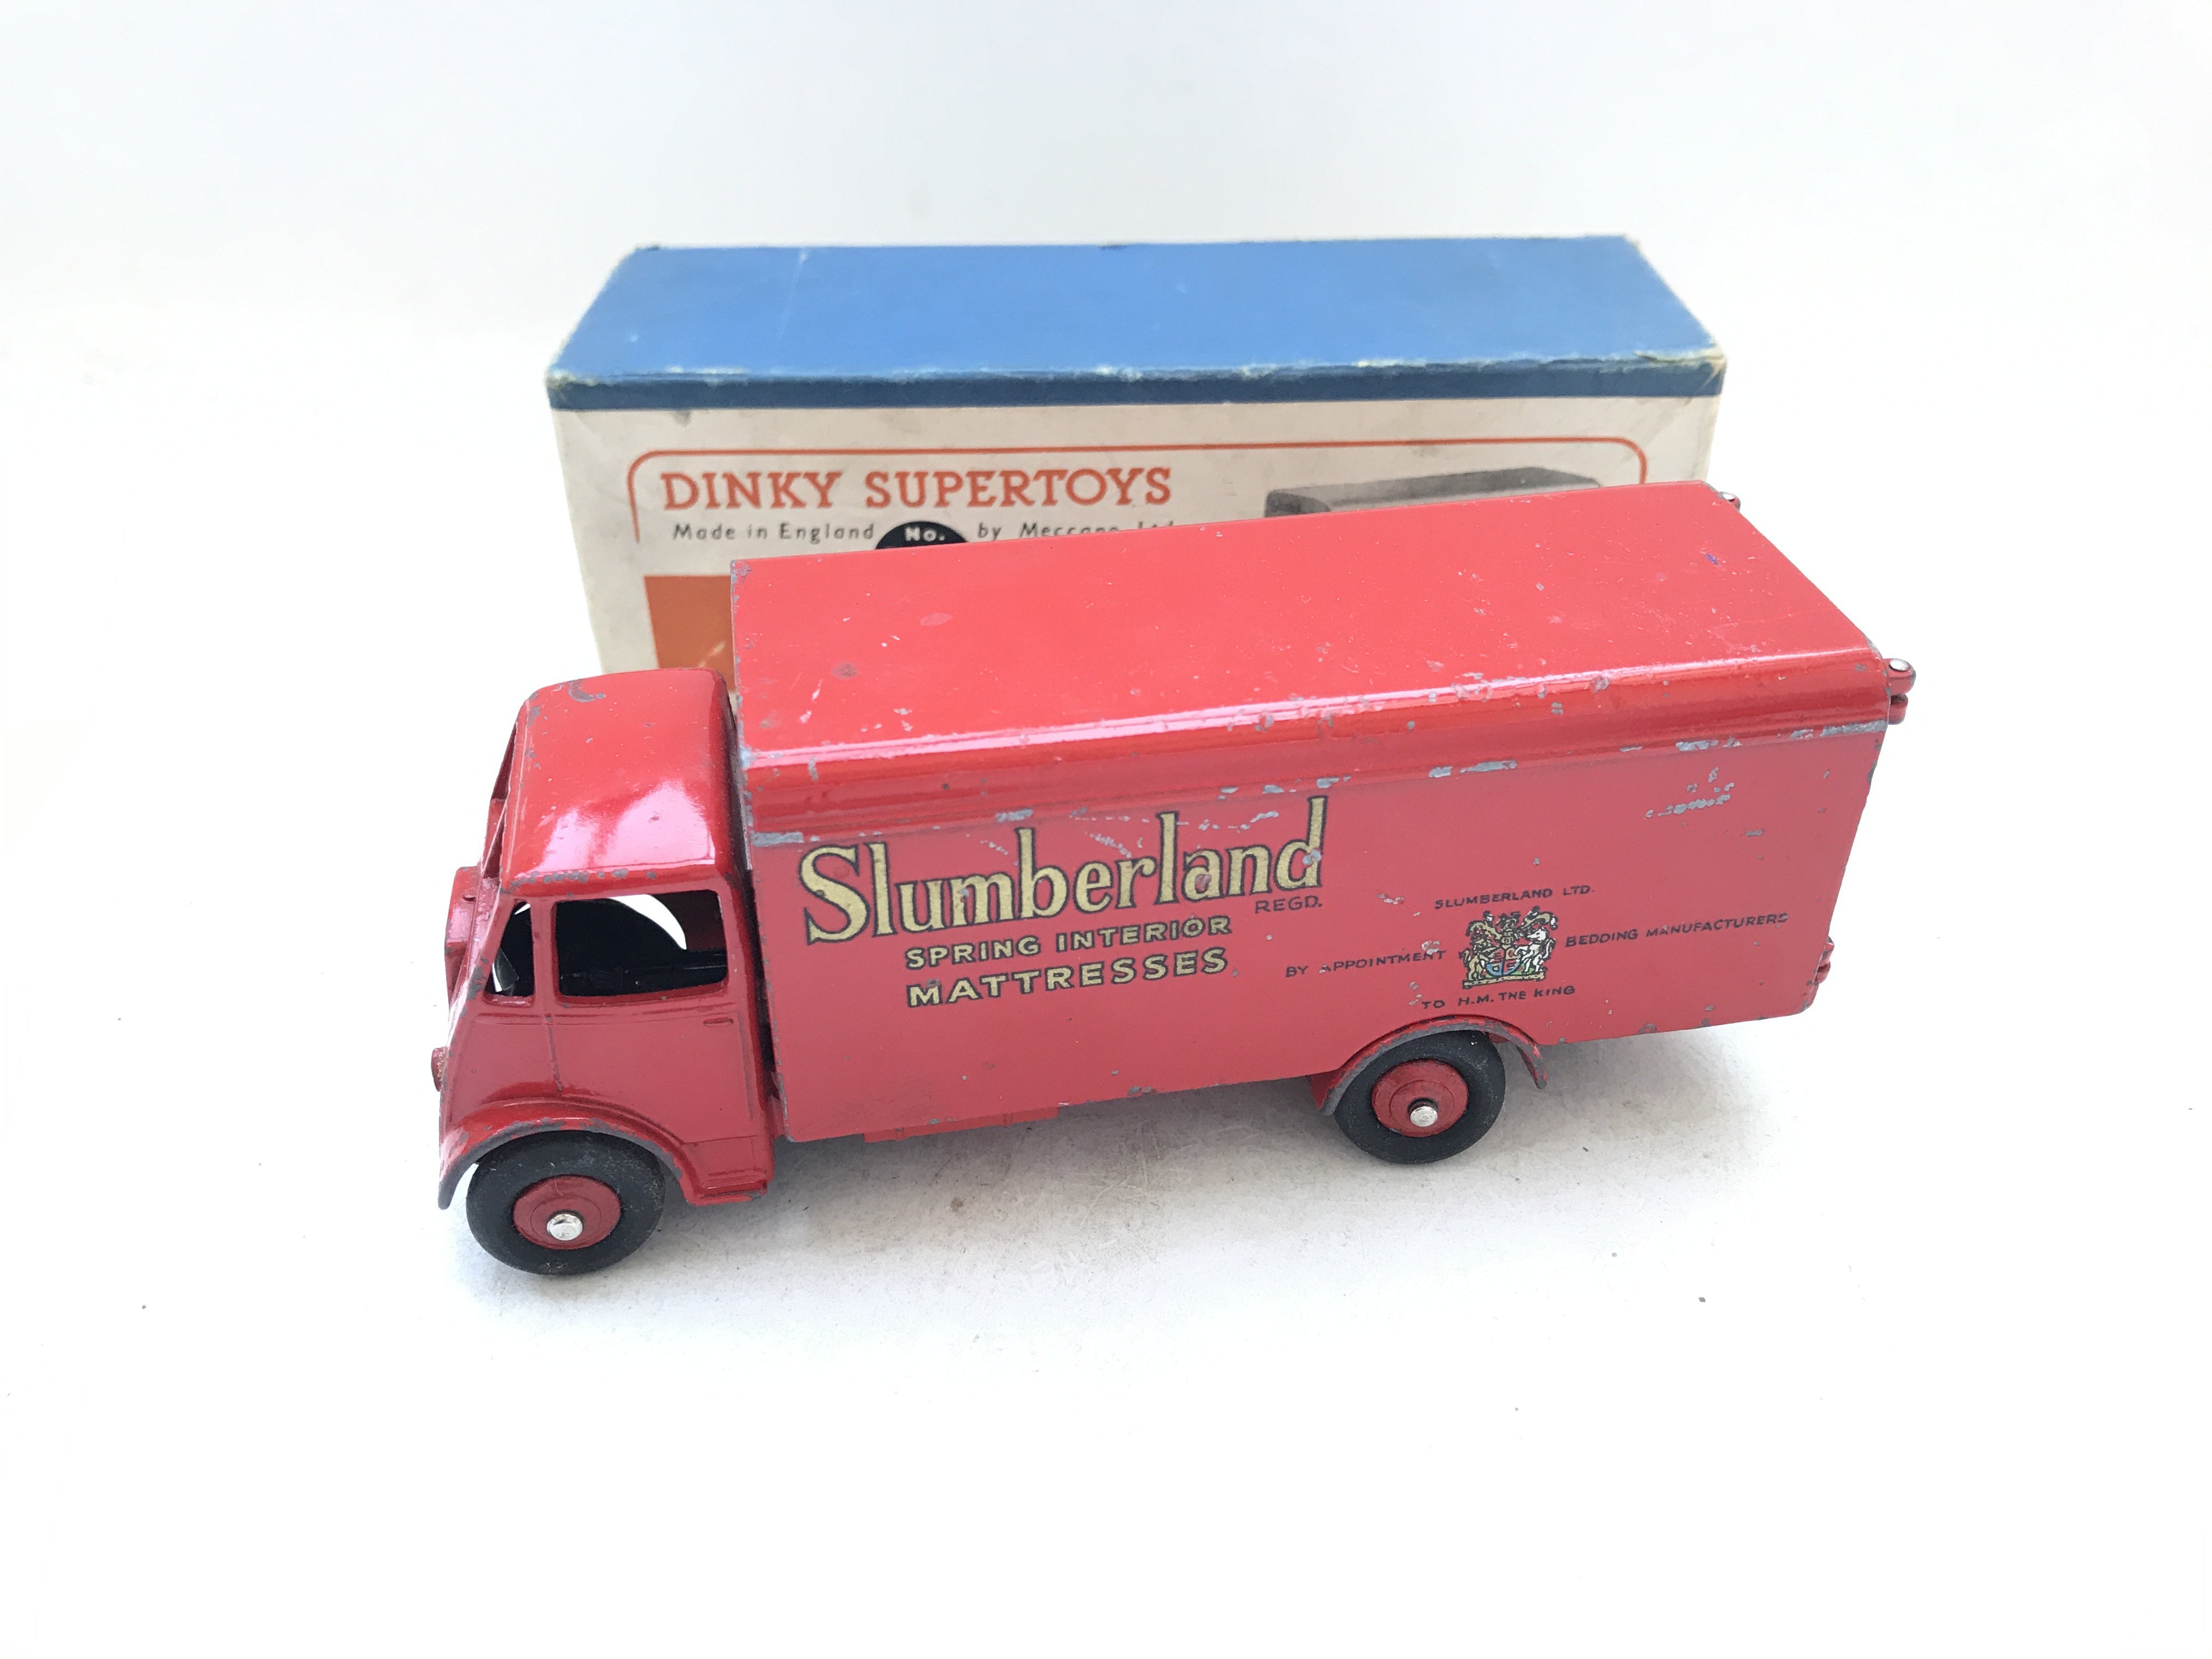 A Dinky Supertoys Guy Van 'Slumberland' Boxed #514. - Image 2 of 3